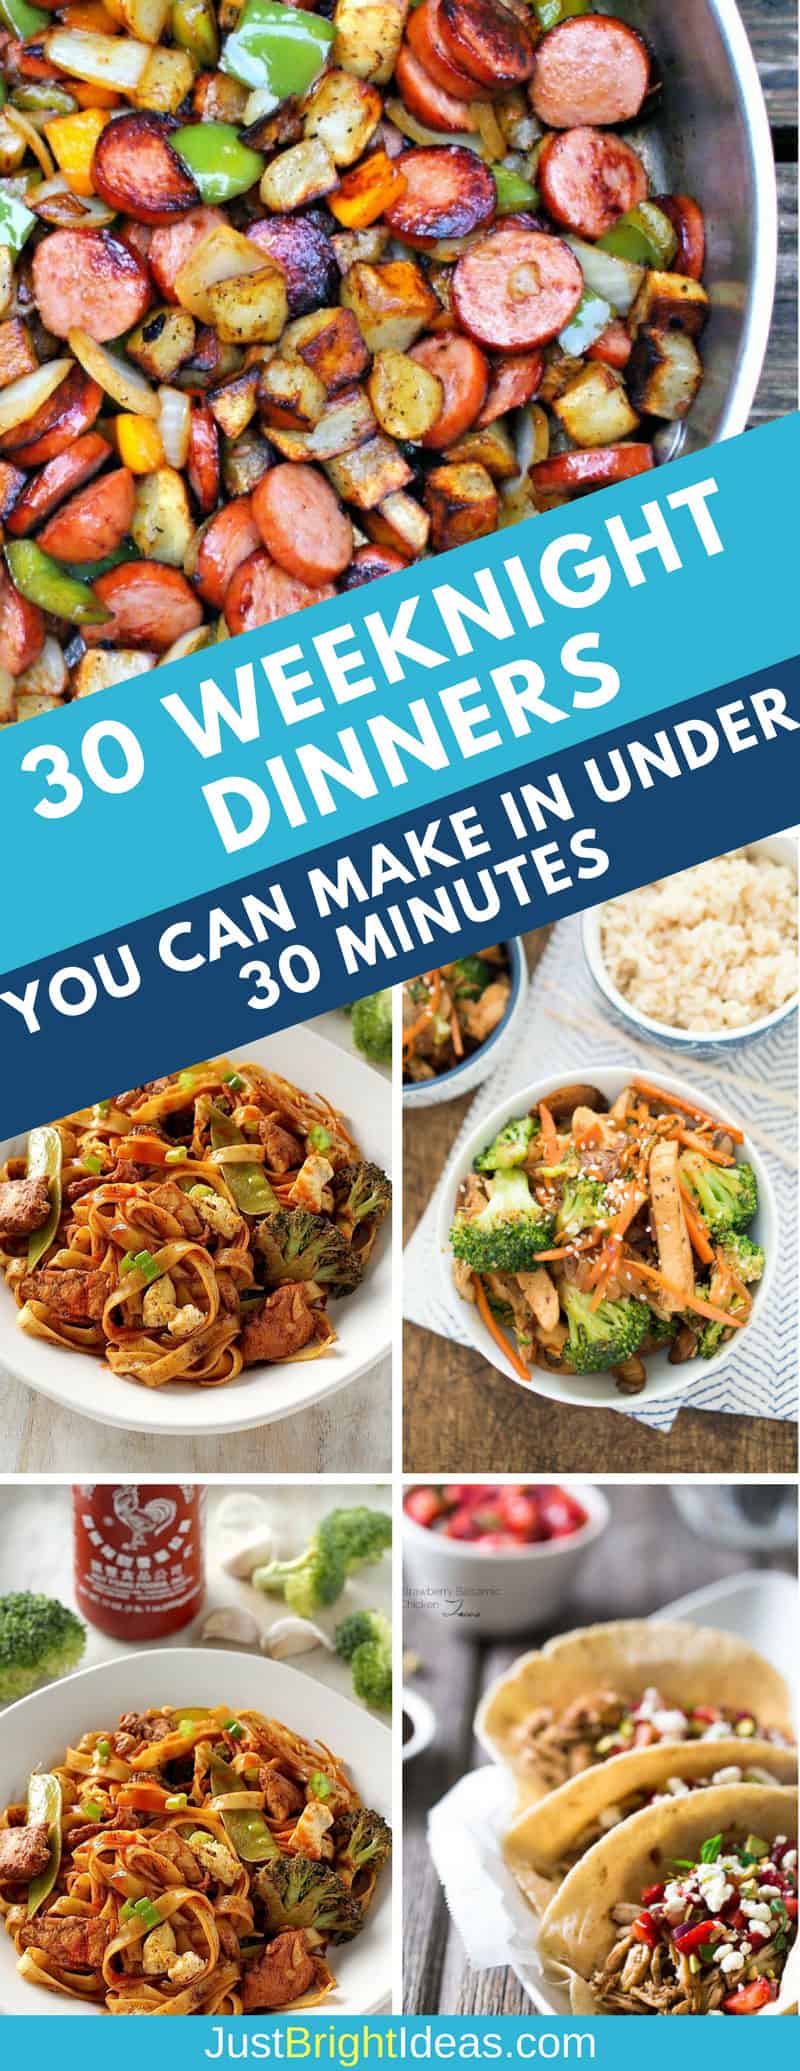 Best 30 Minute Dinner Recipes - Easy Midweek Meals!